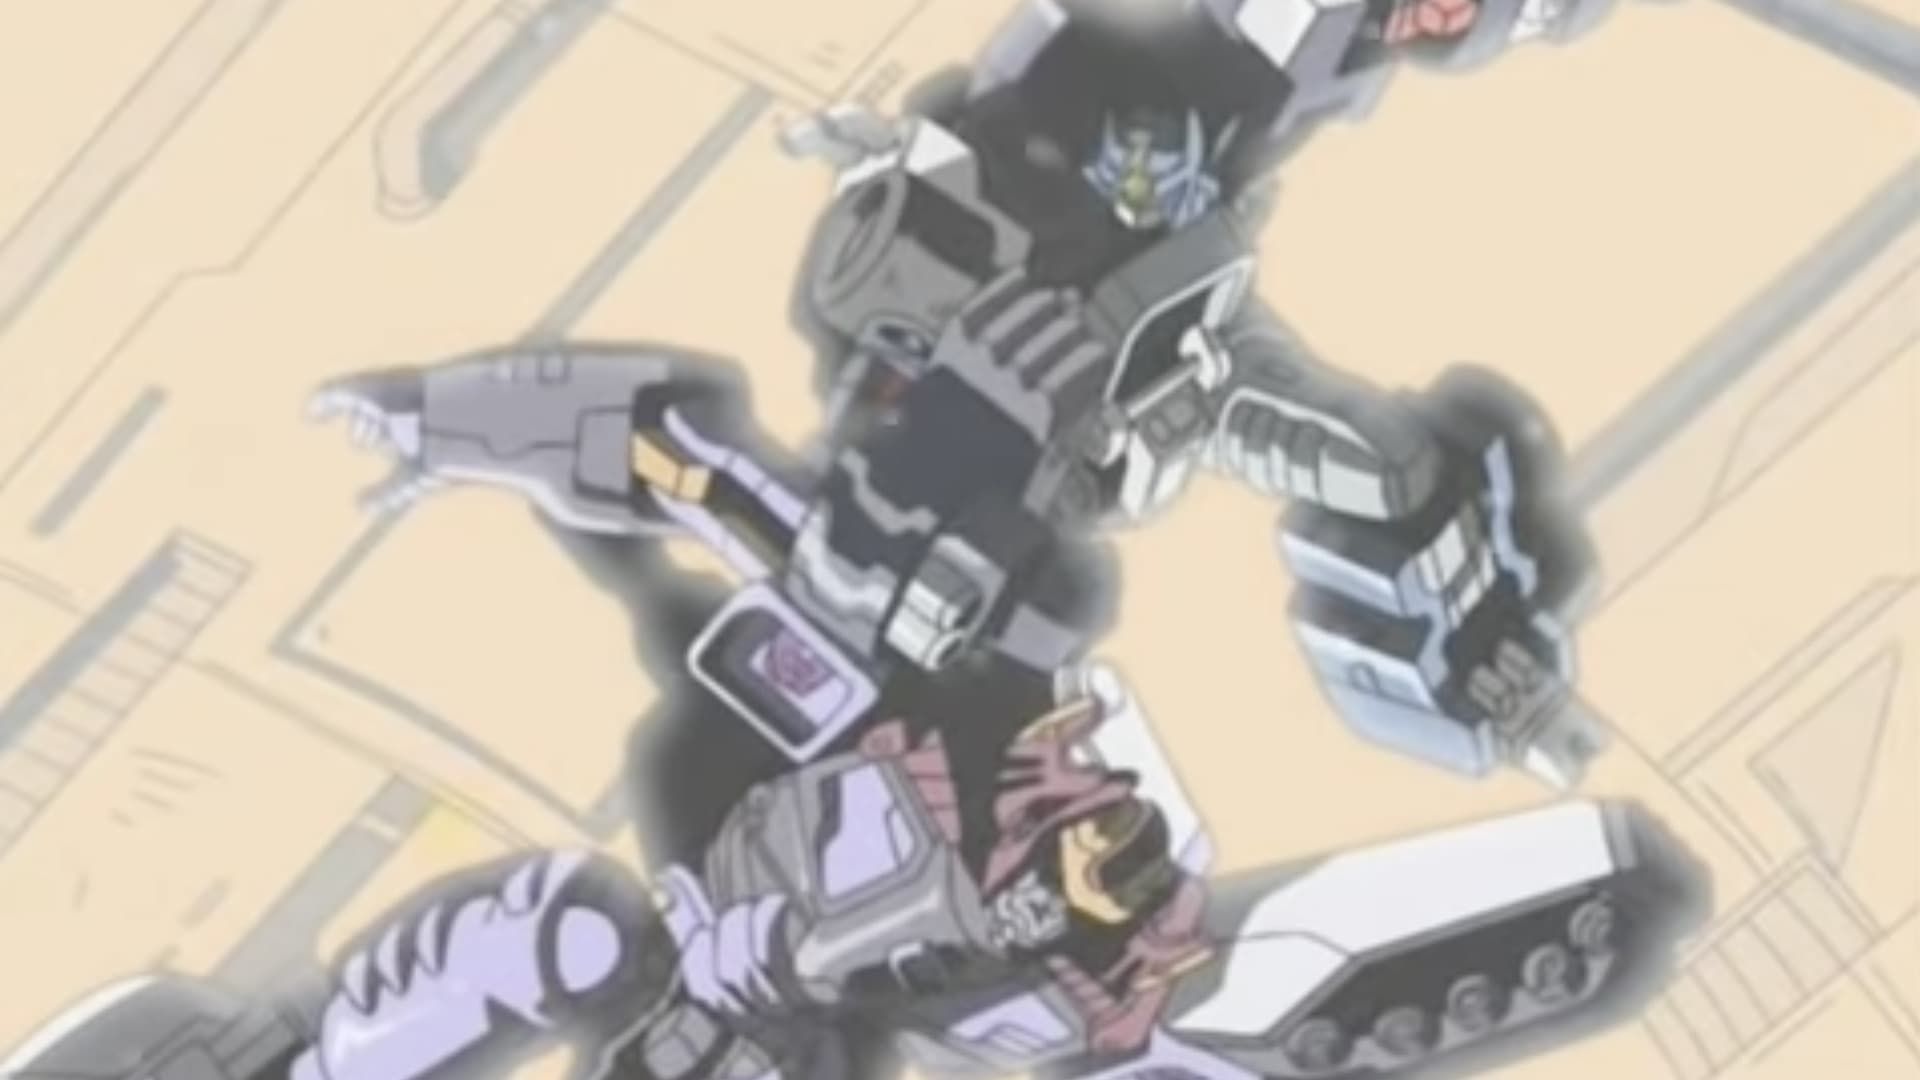 Transformers: Armada background